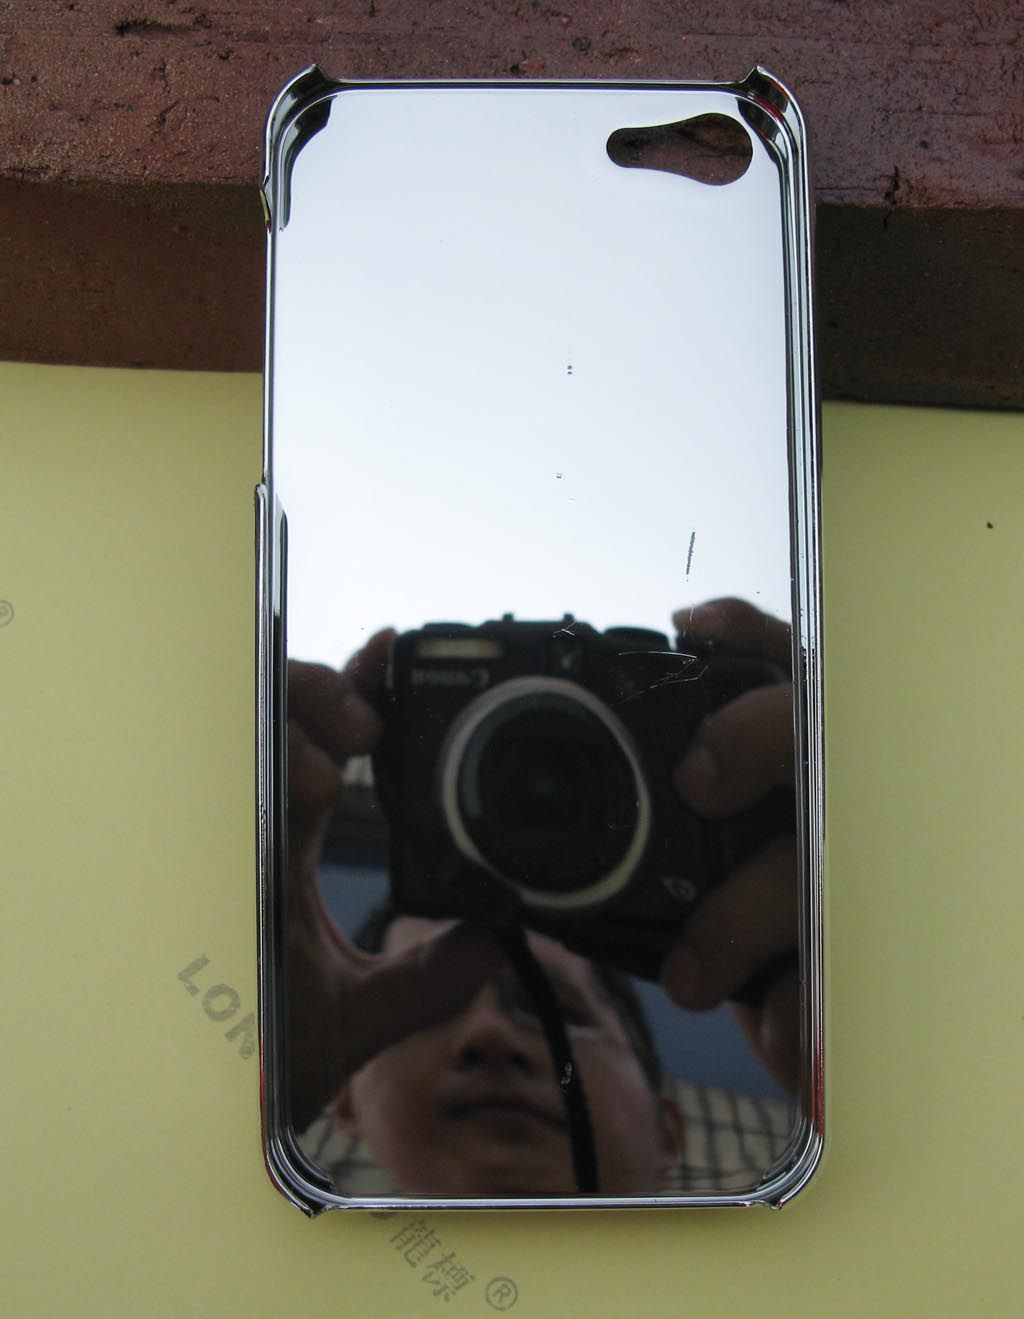   Flower Diamond Bling Crystal Case Cover for iPhone 5 I5FY022